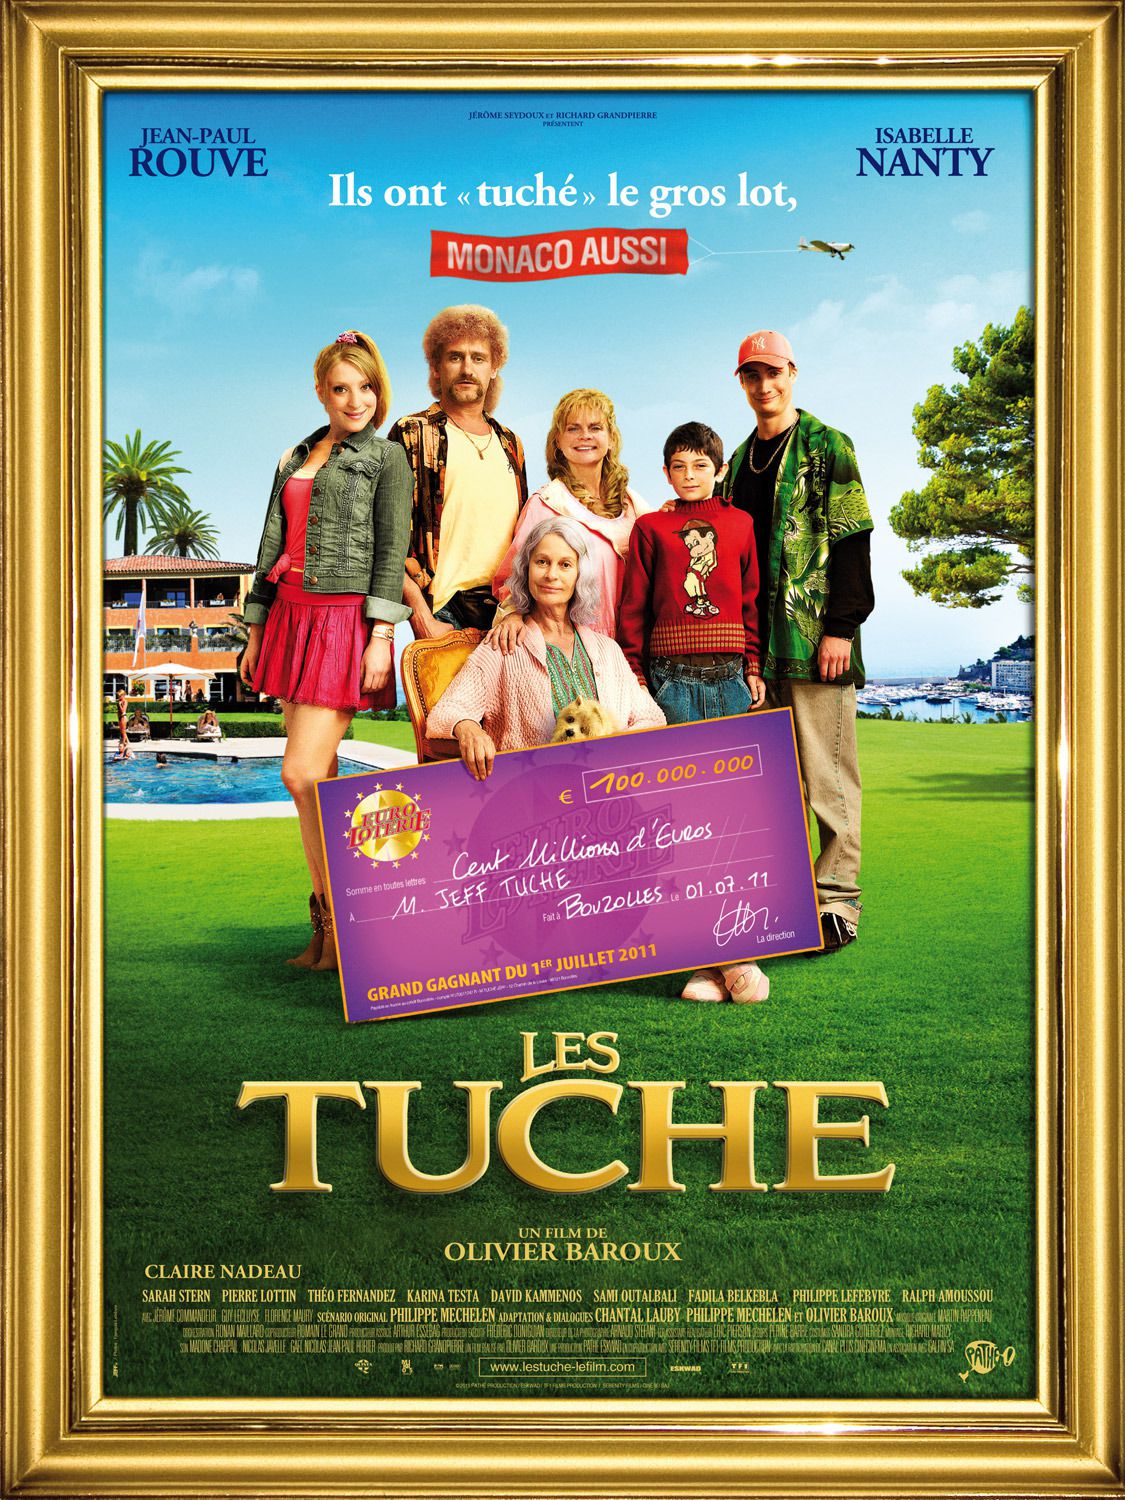 Les Tuche - Film (2011) streaming VF gratuit complet